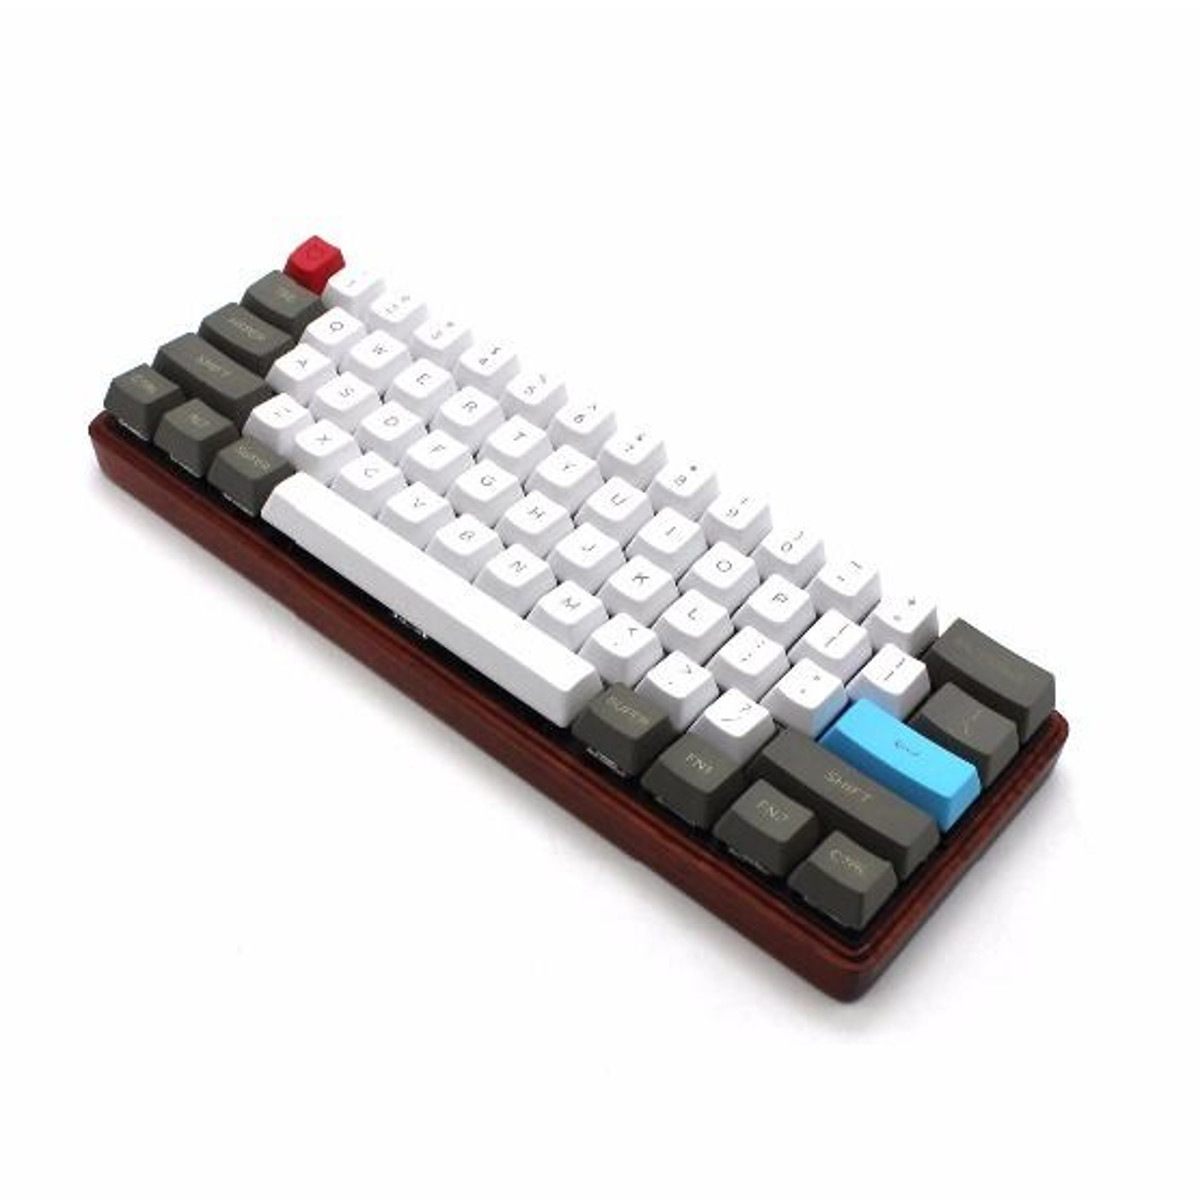 61 Keys White&Grey Keycap Set OEM Profile PBT Thick ANSI Layout Keycaps for 60% Mechanical Keyboard 2